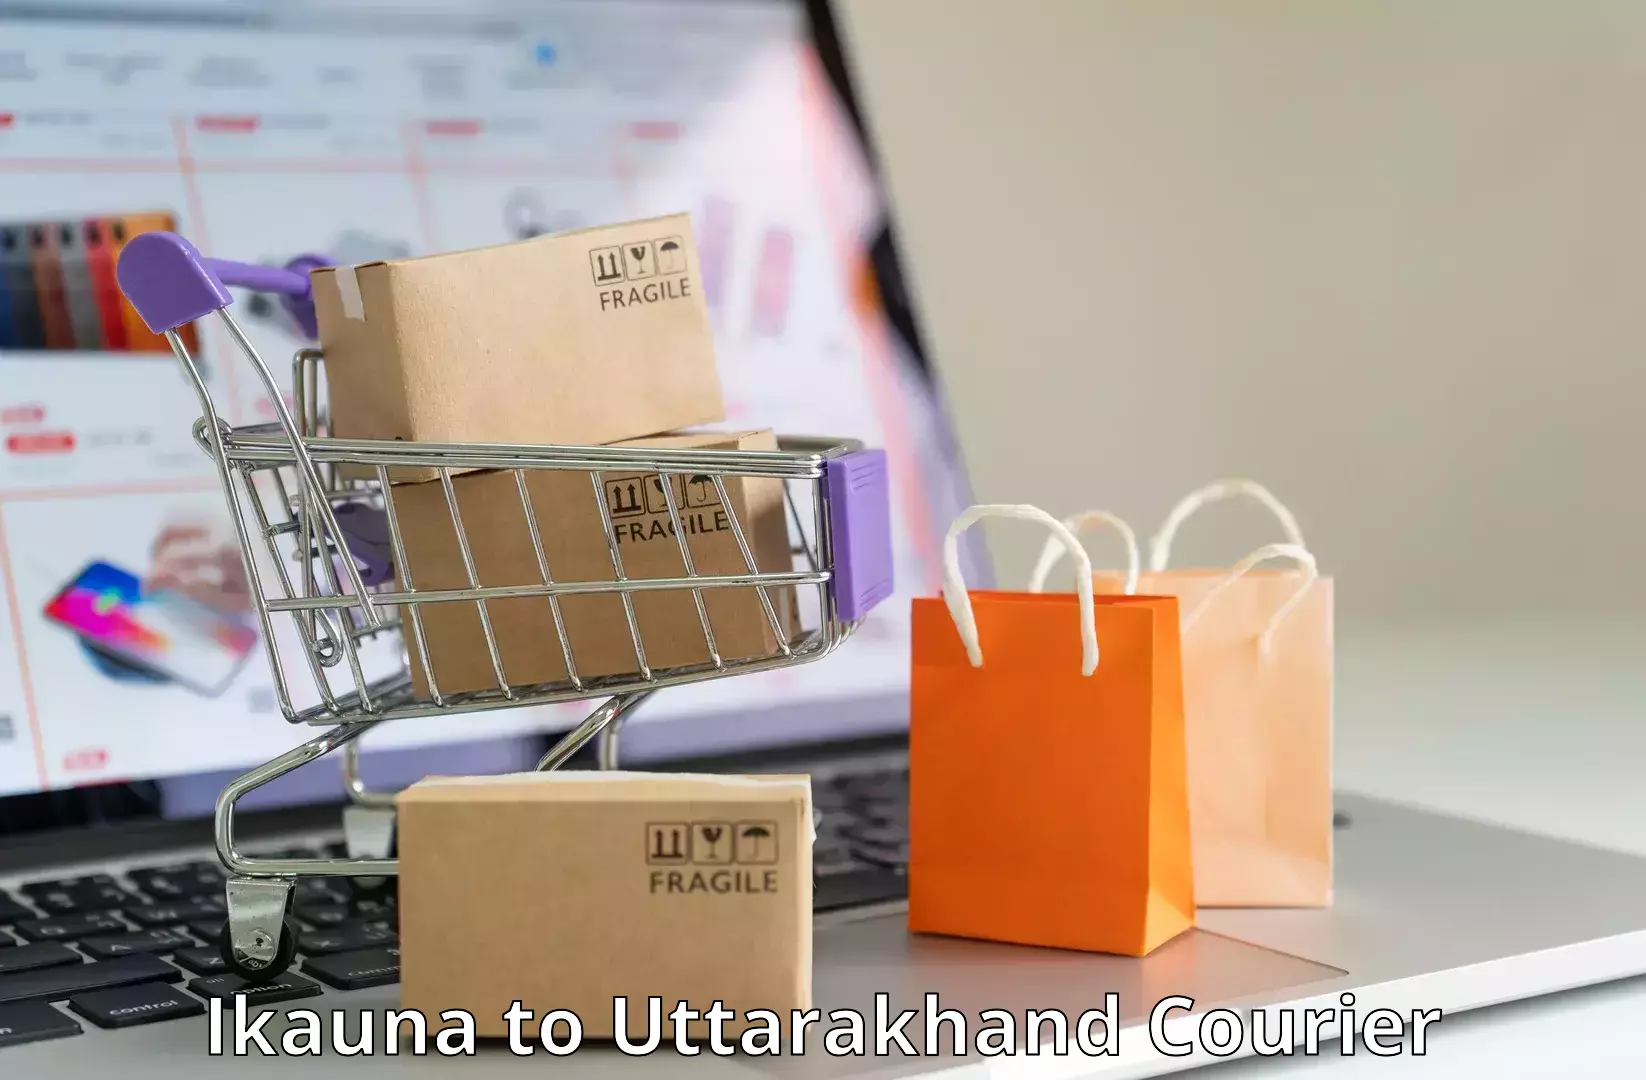 On-demand delivery Ikauna to Uttarakhand